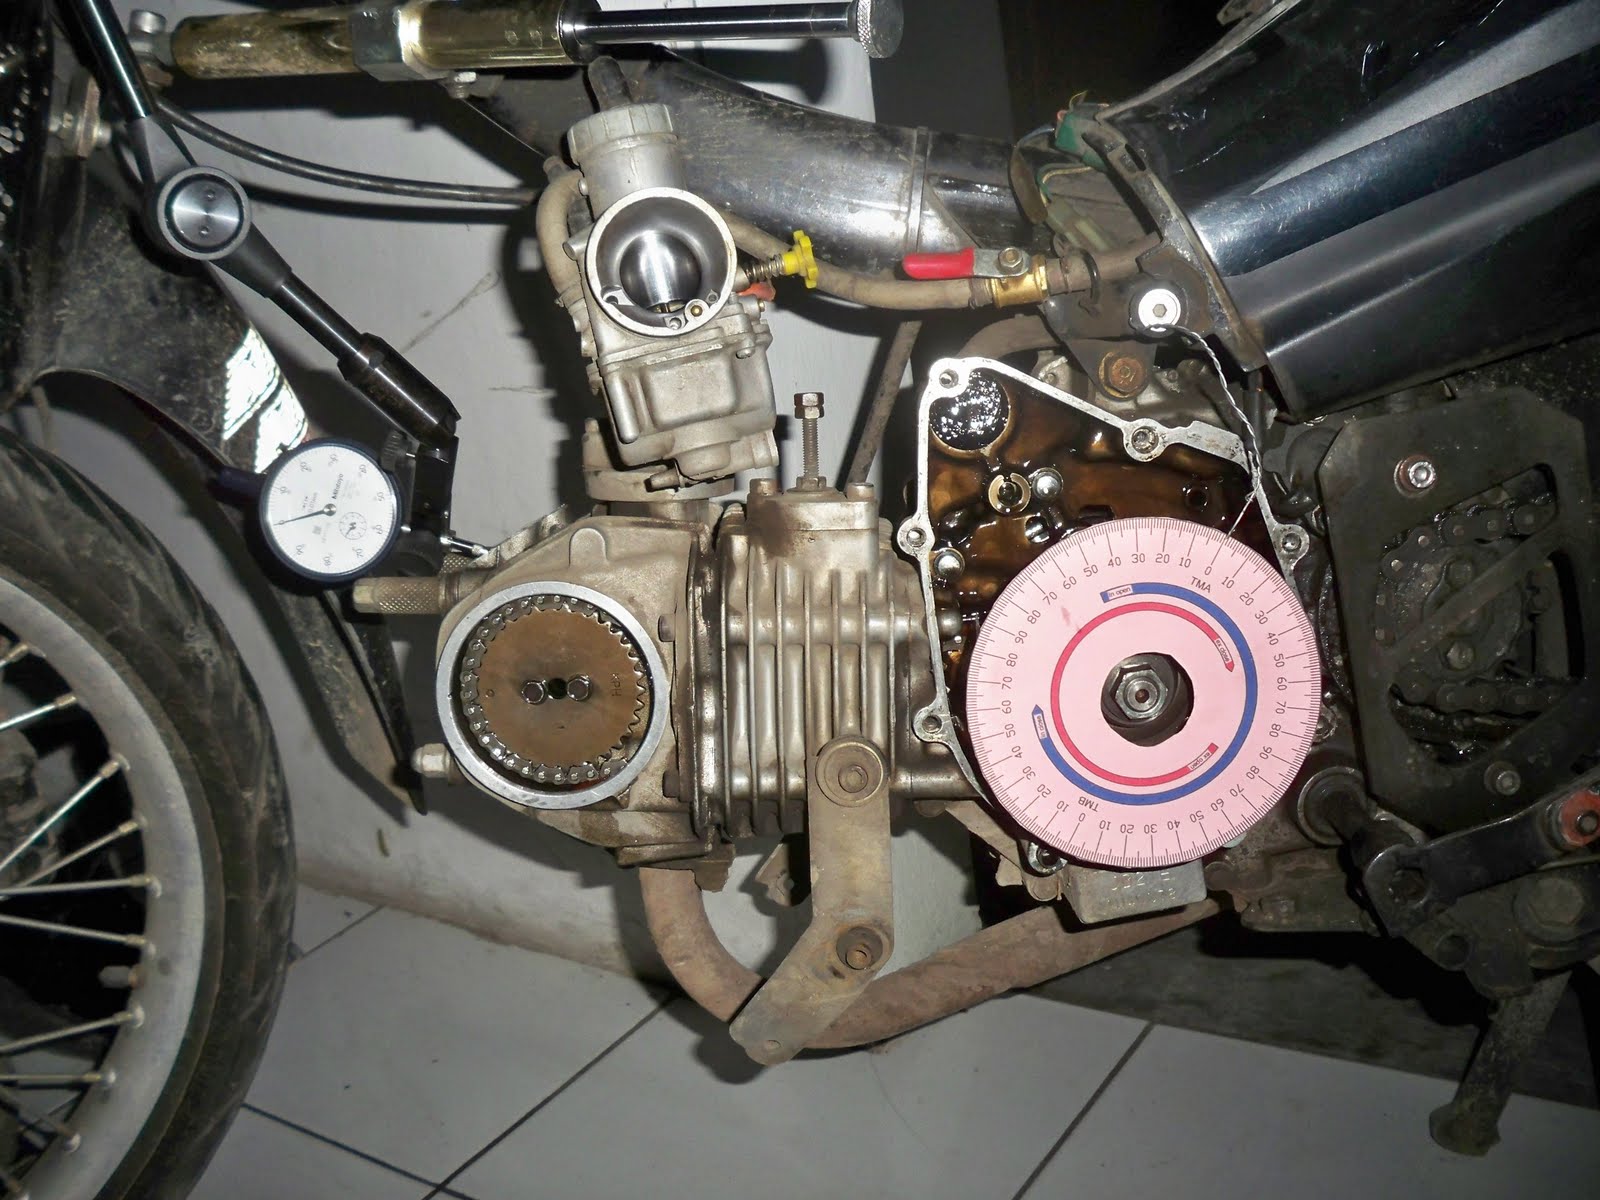 Koleksi Gambar Motor Drag Honda Karisma Terlengkap Kinyis Motor